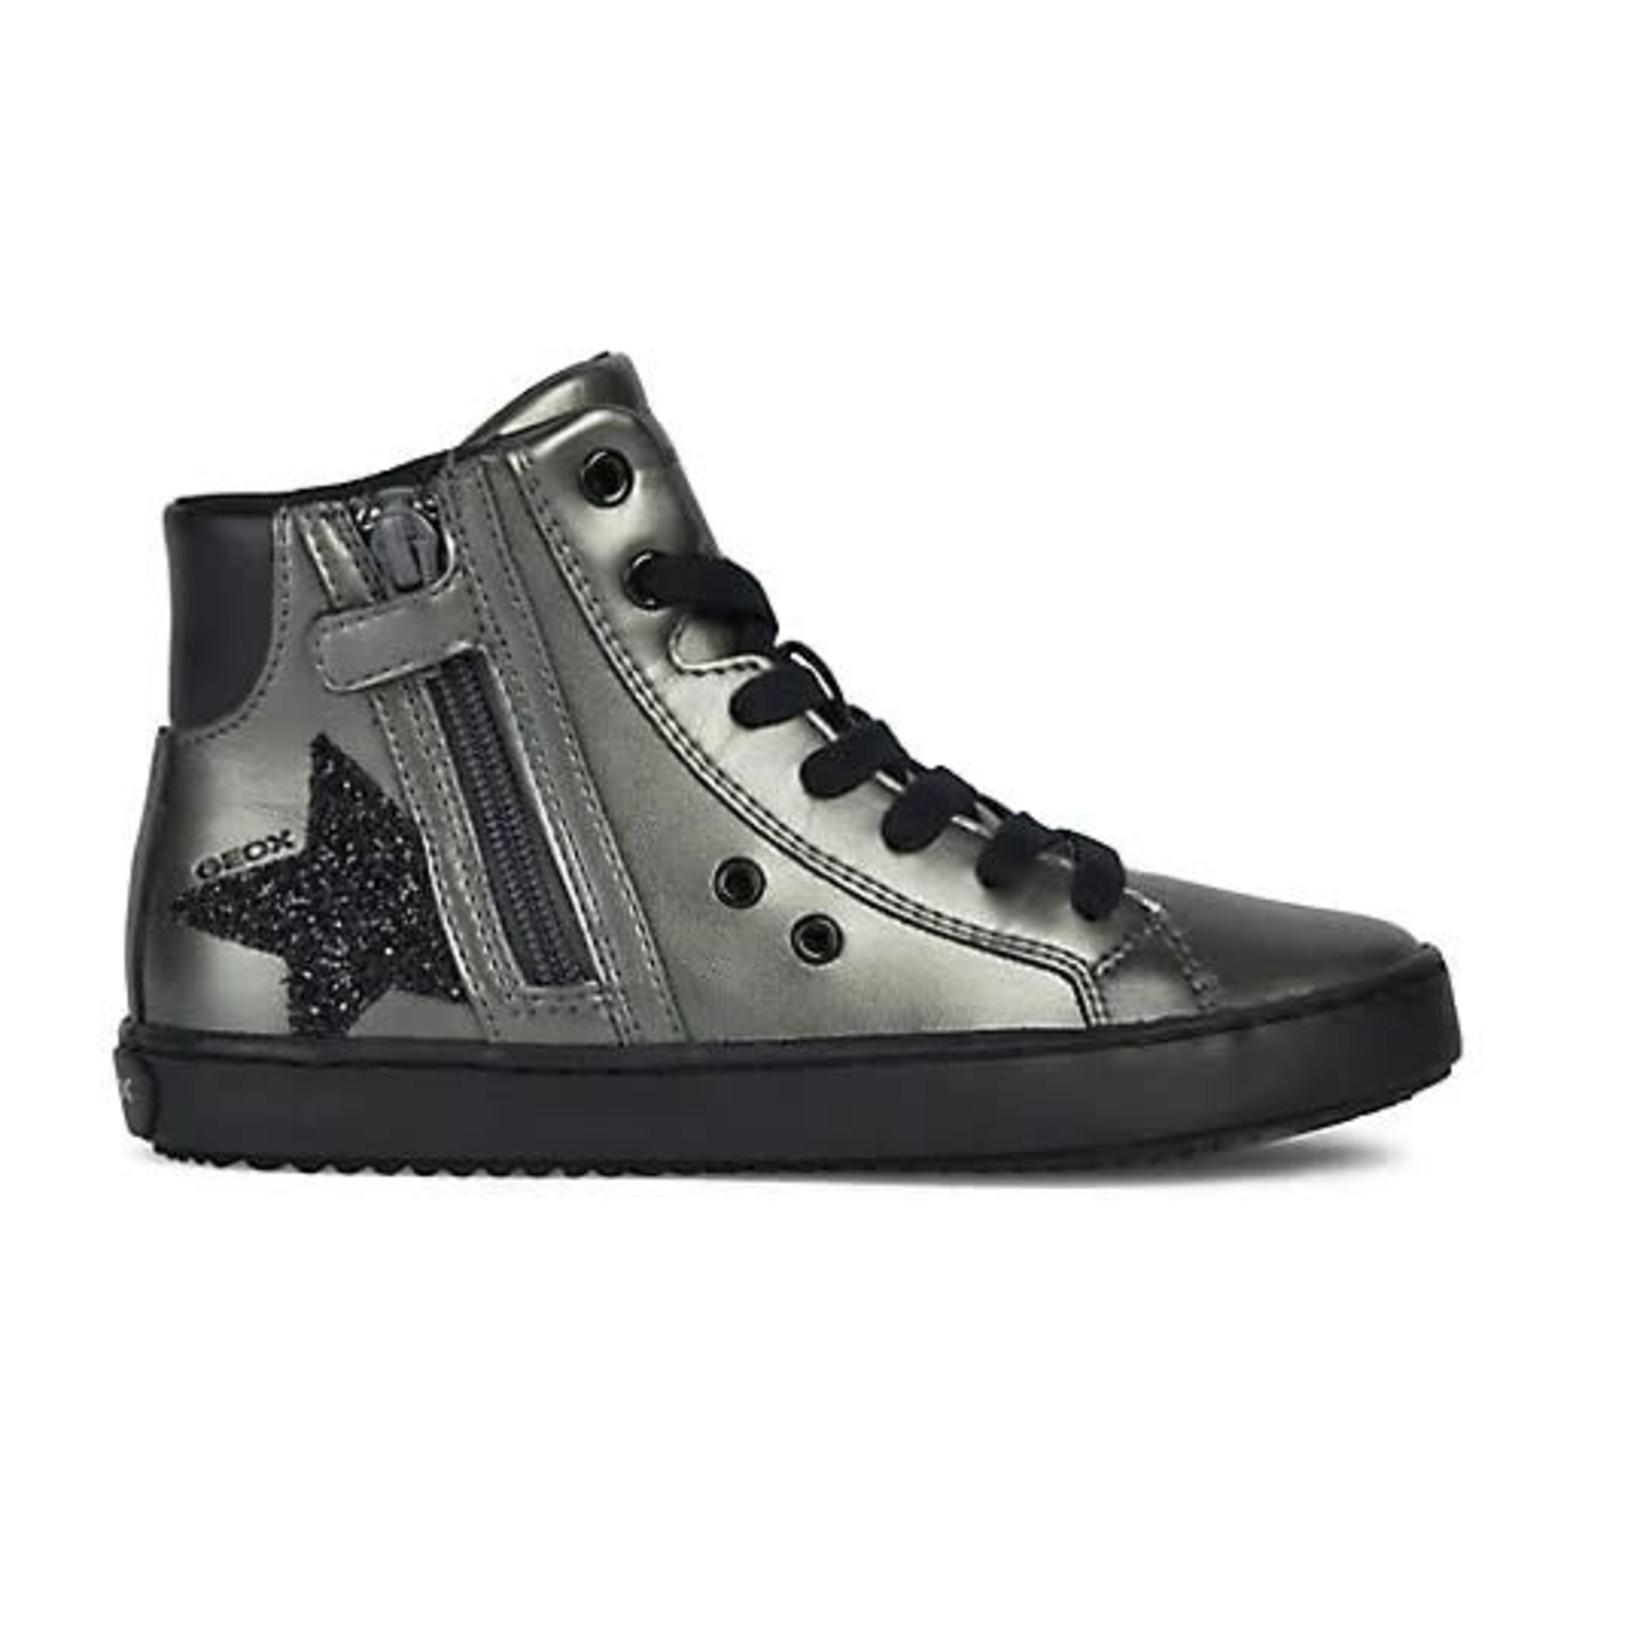 Geox GEOX - High Top Dark Grey with Star Print Shoes 'J Kalispera G. I.'